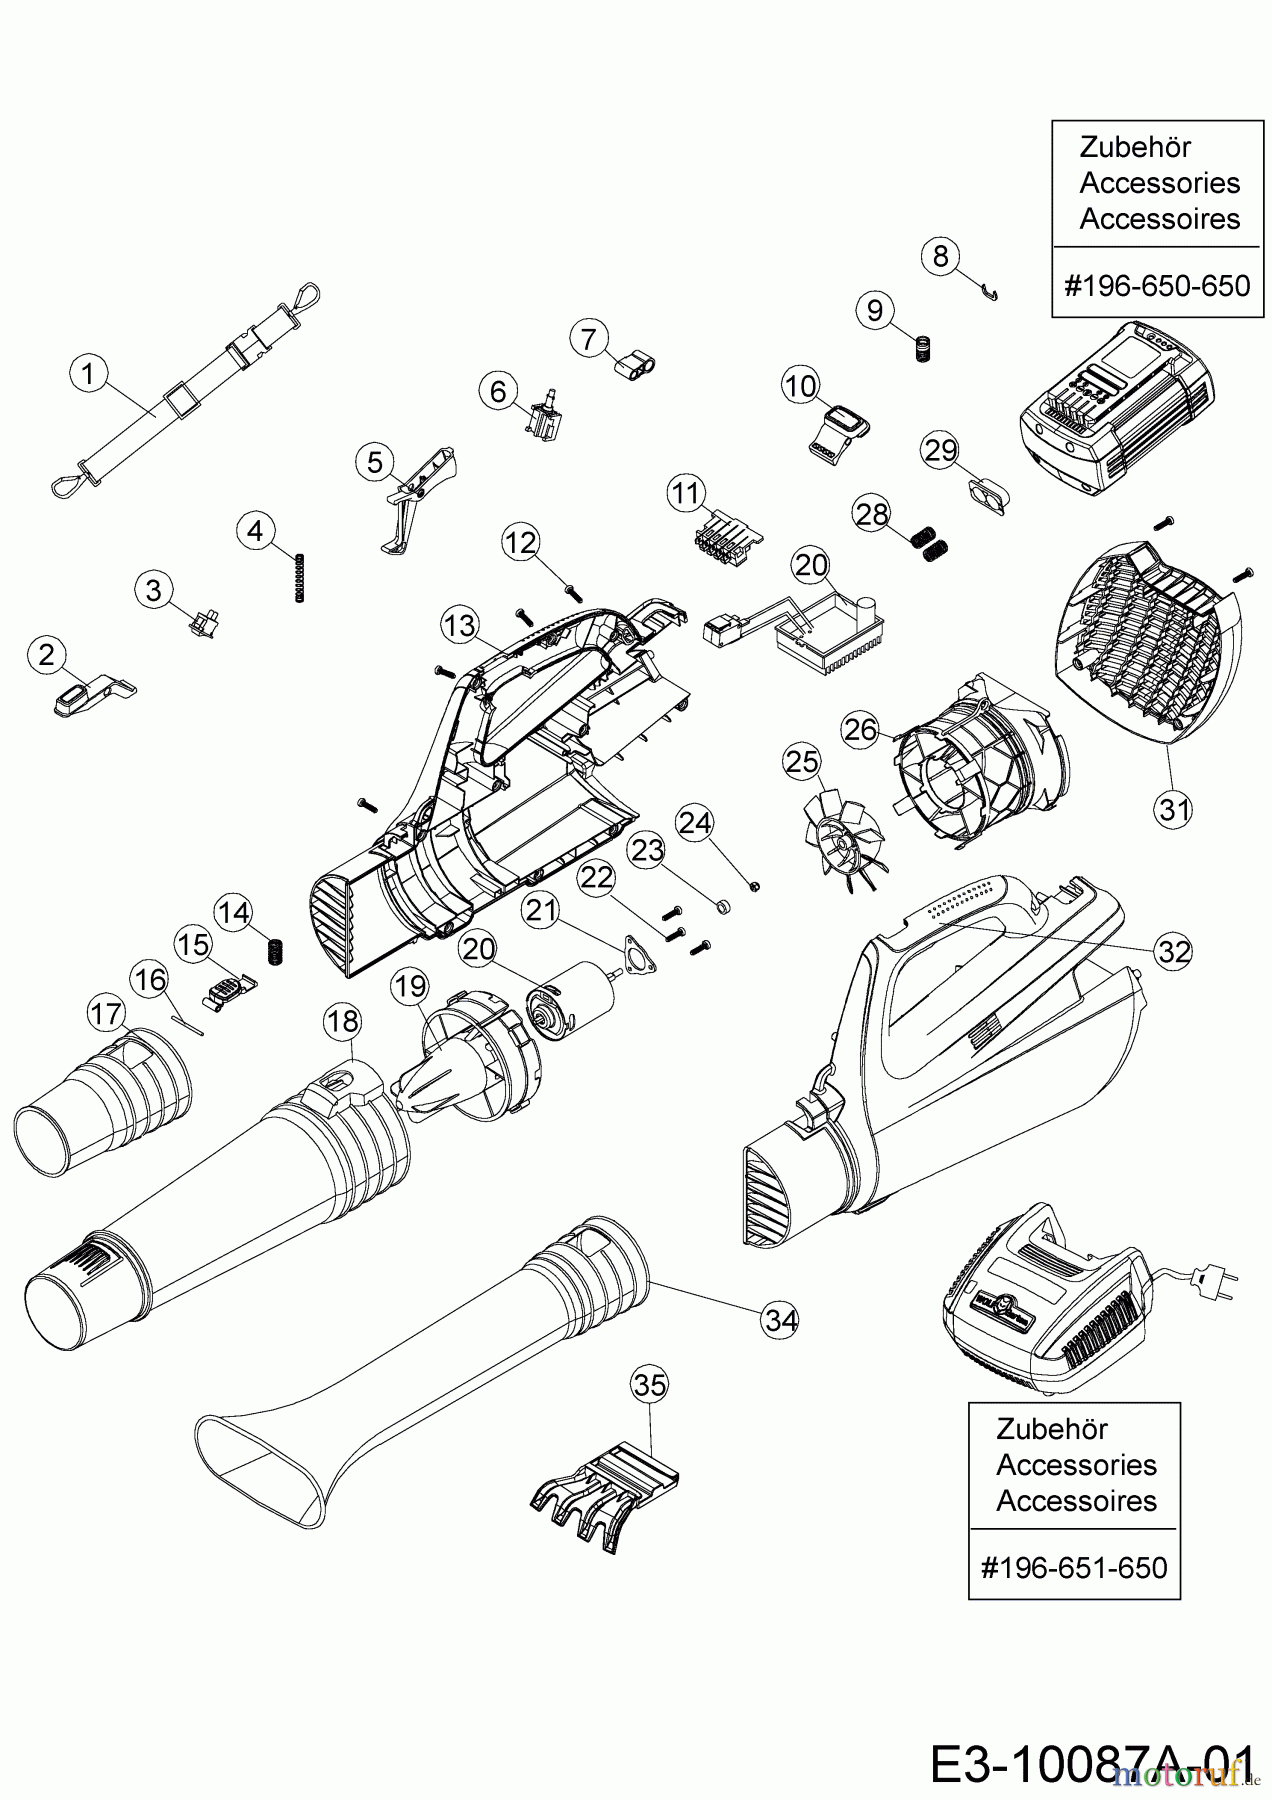  Wolf-Garten battery leaf blower 72V Li-Ion Power 24 B 41AA0BO-650  (2018) Basic machine